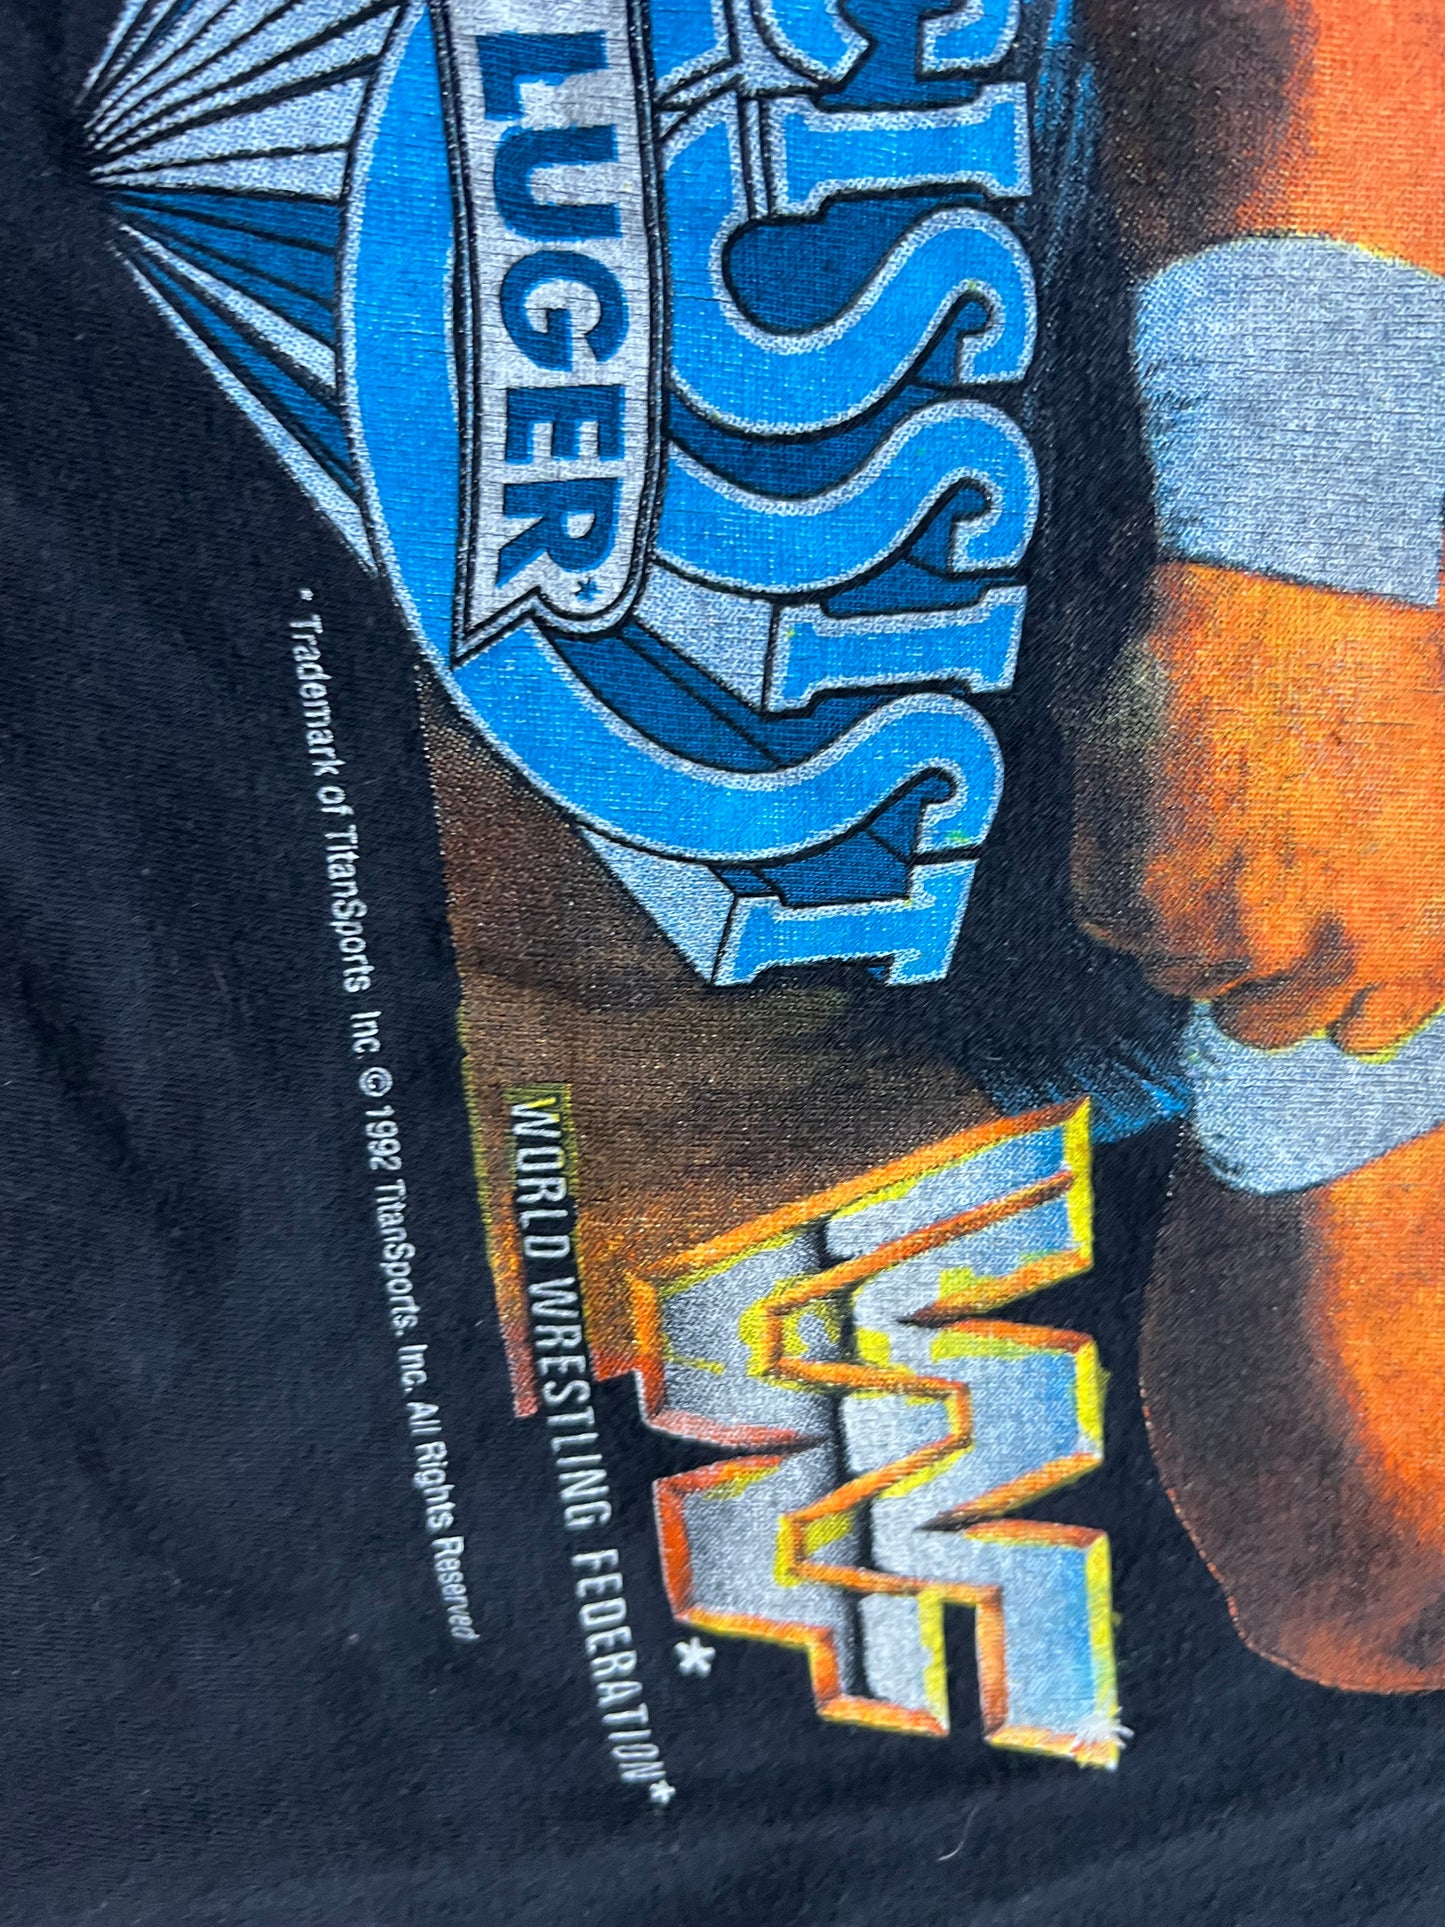 1993 WWF “Narcissist” Lex Luger shirt